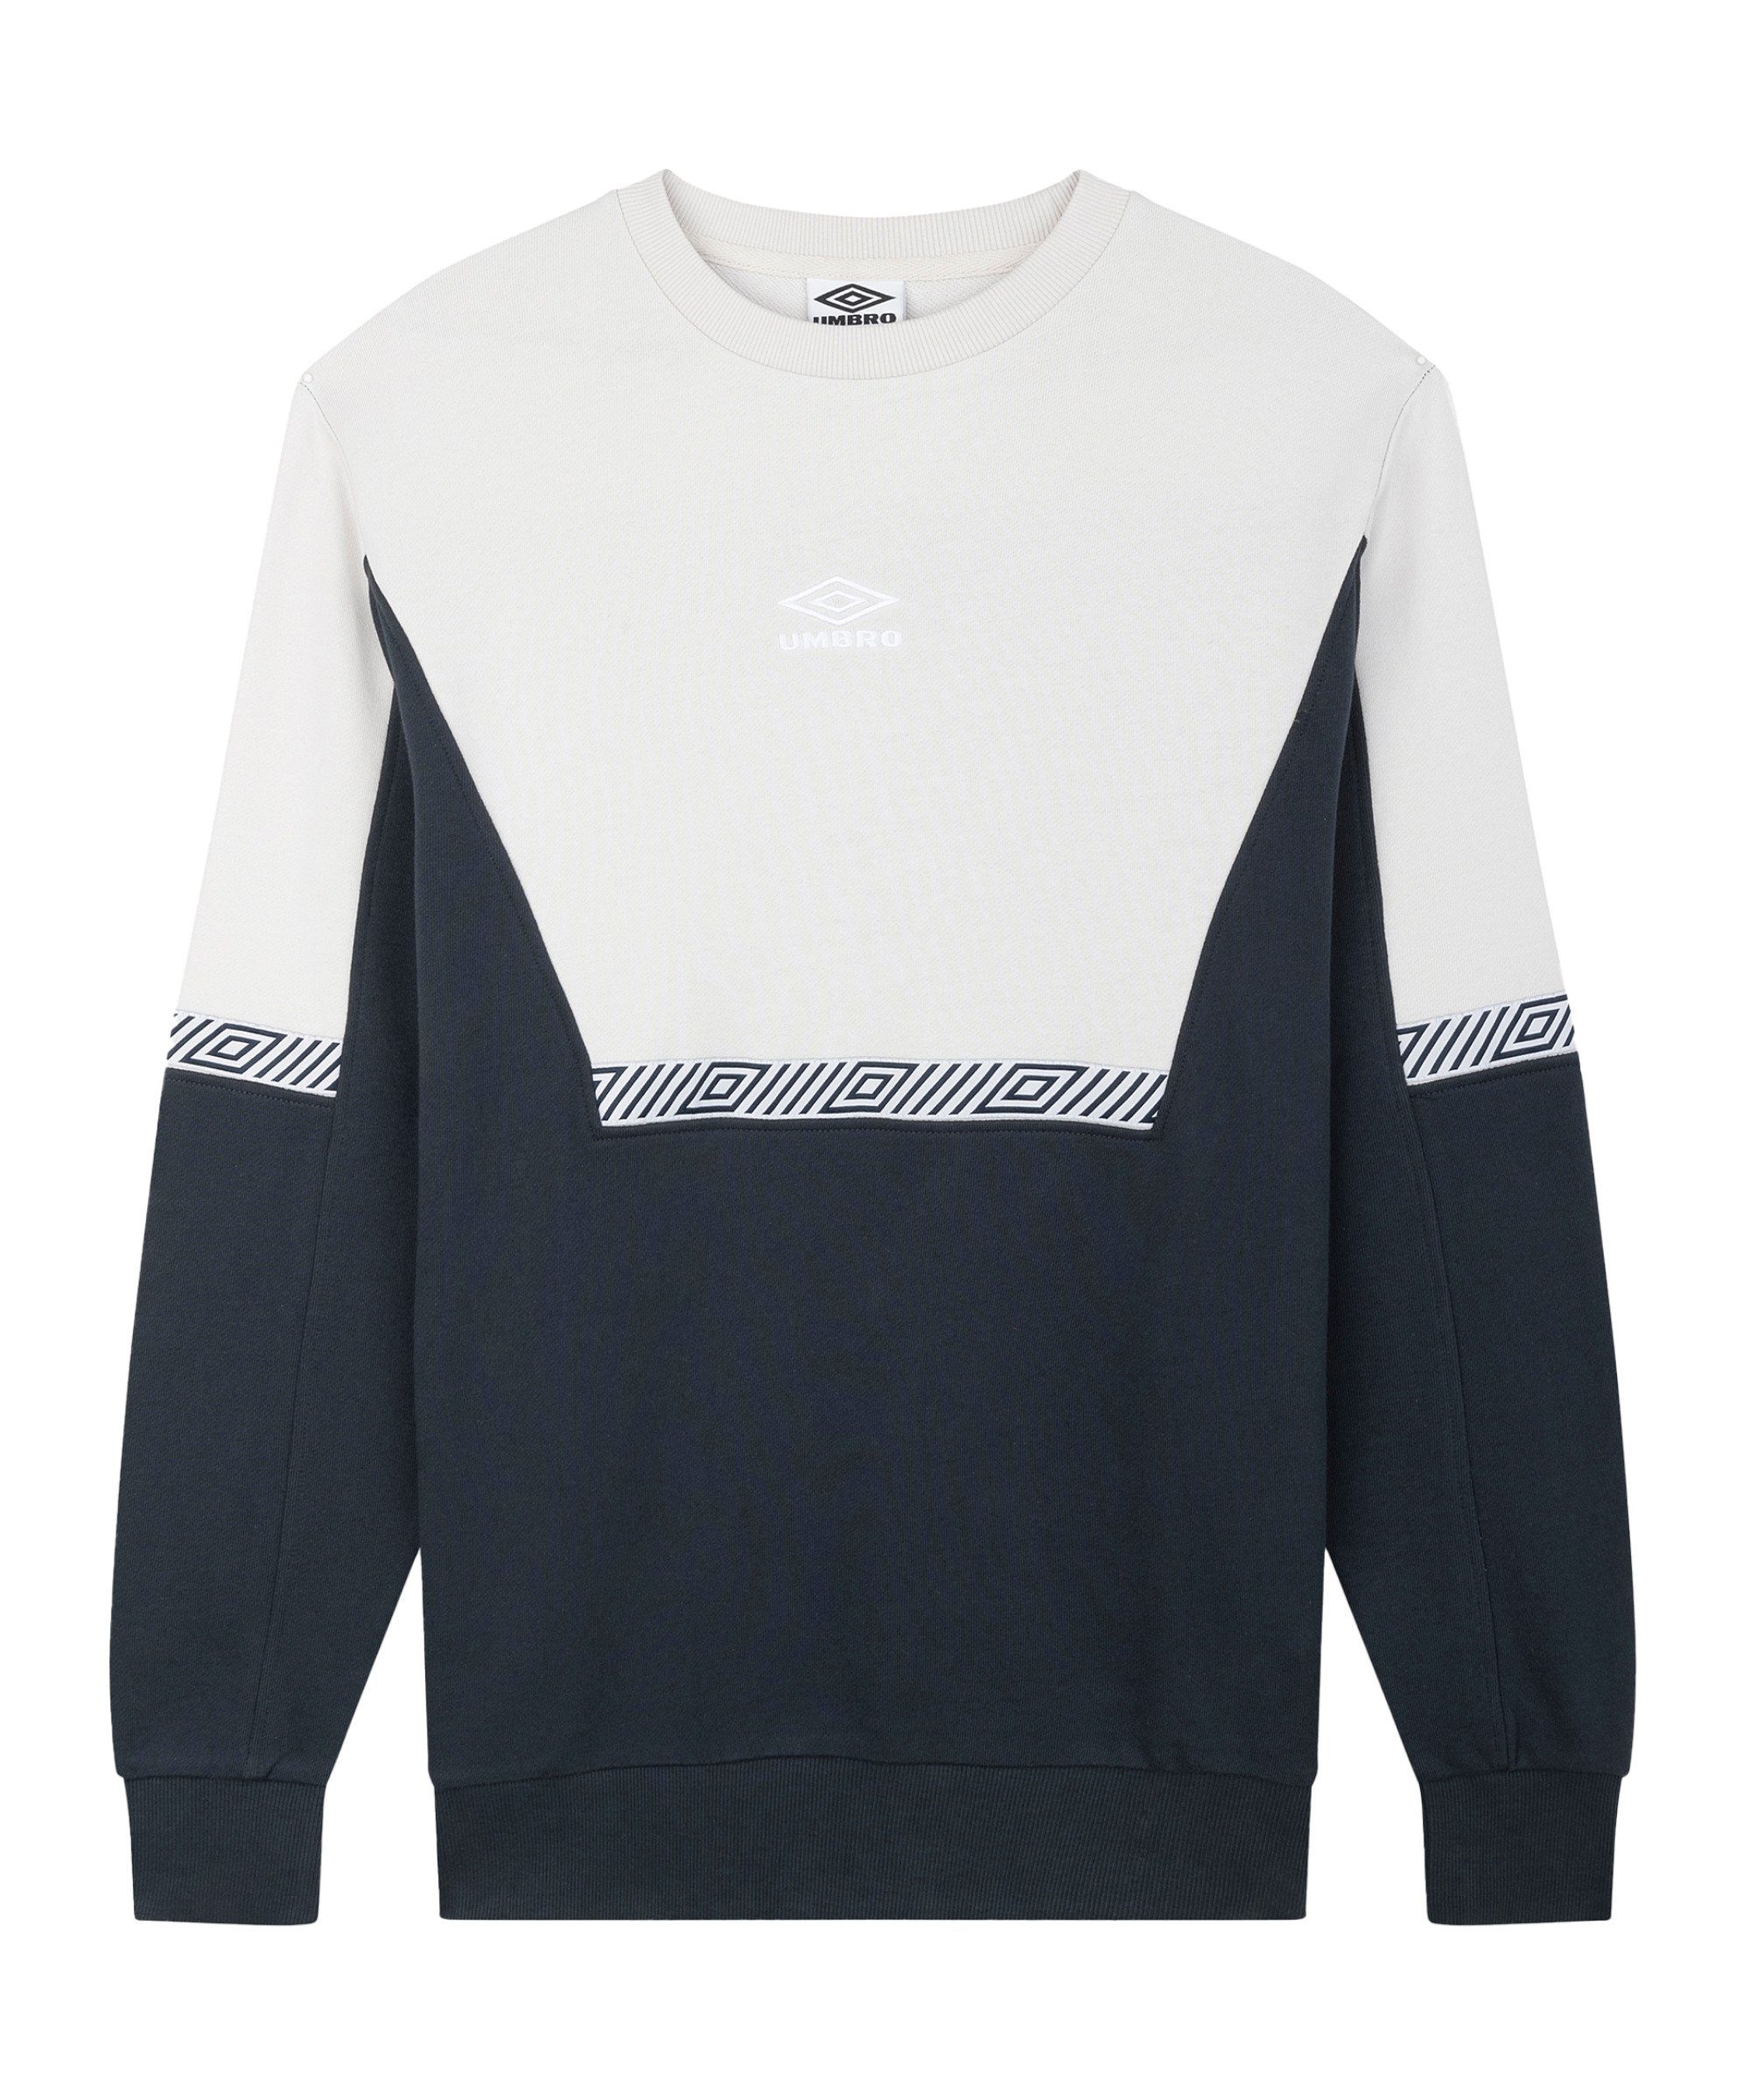 Umbro Sweatshirt graublau Style Sports Sweatshirt Club